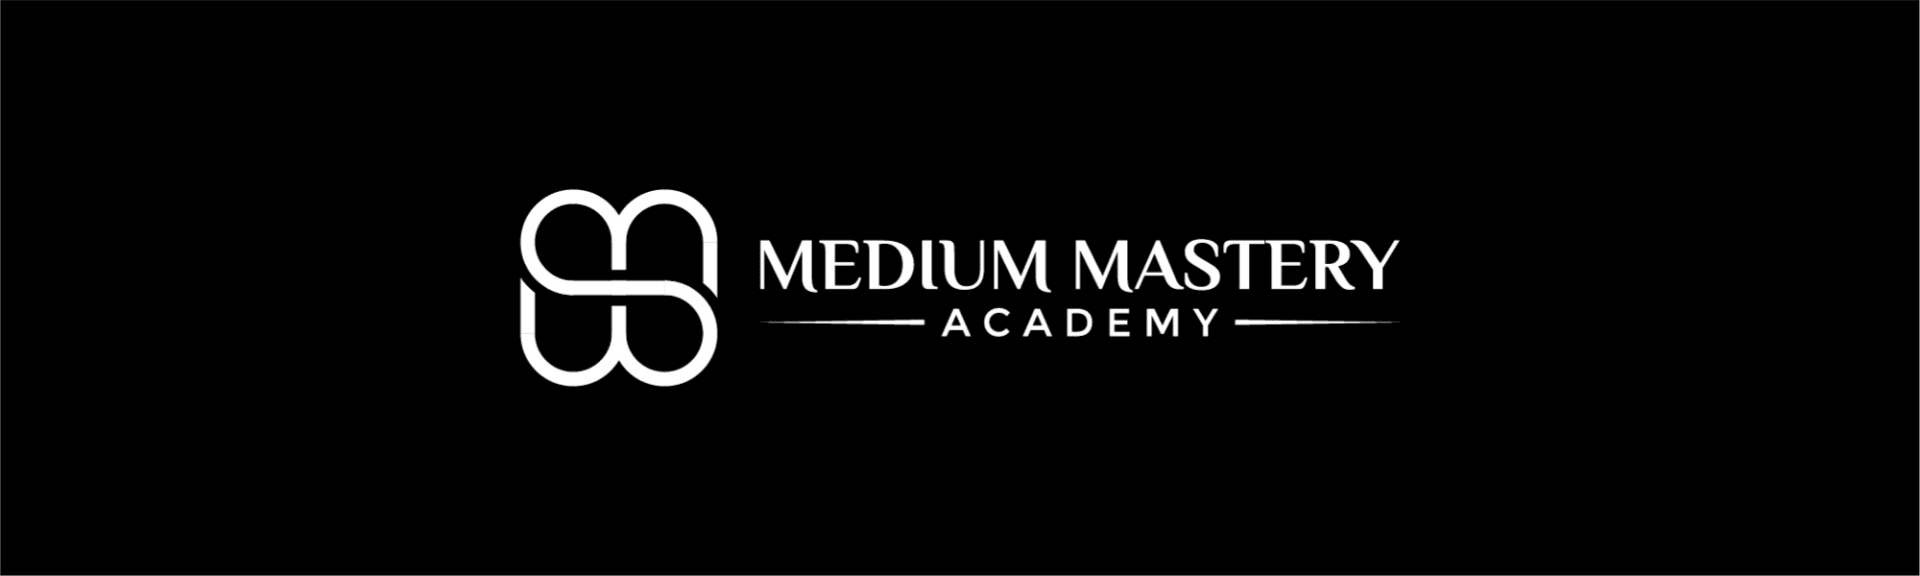 medium mastery wide logo